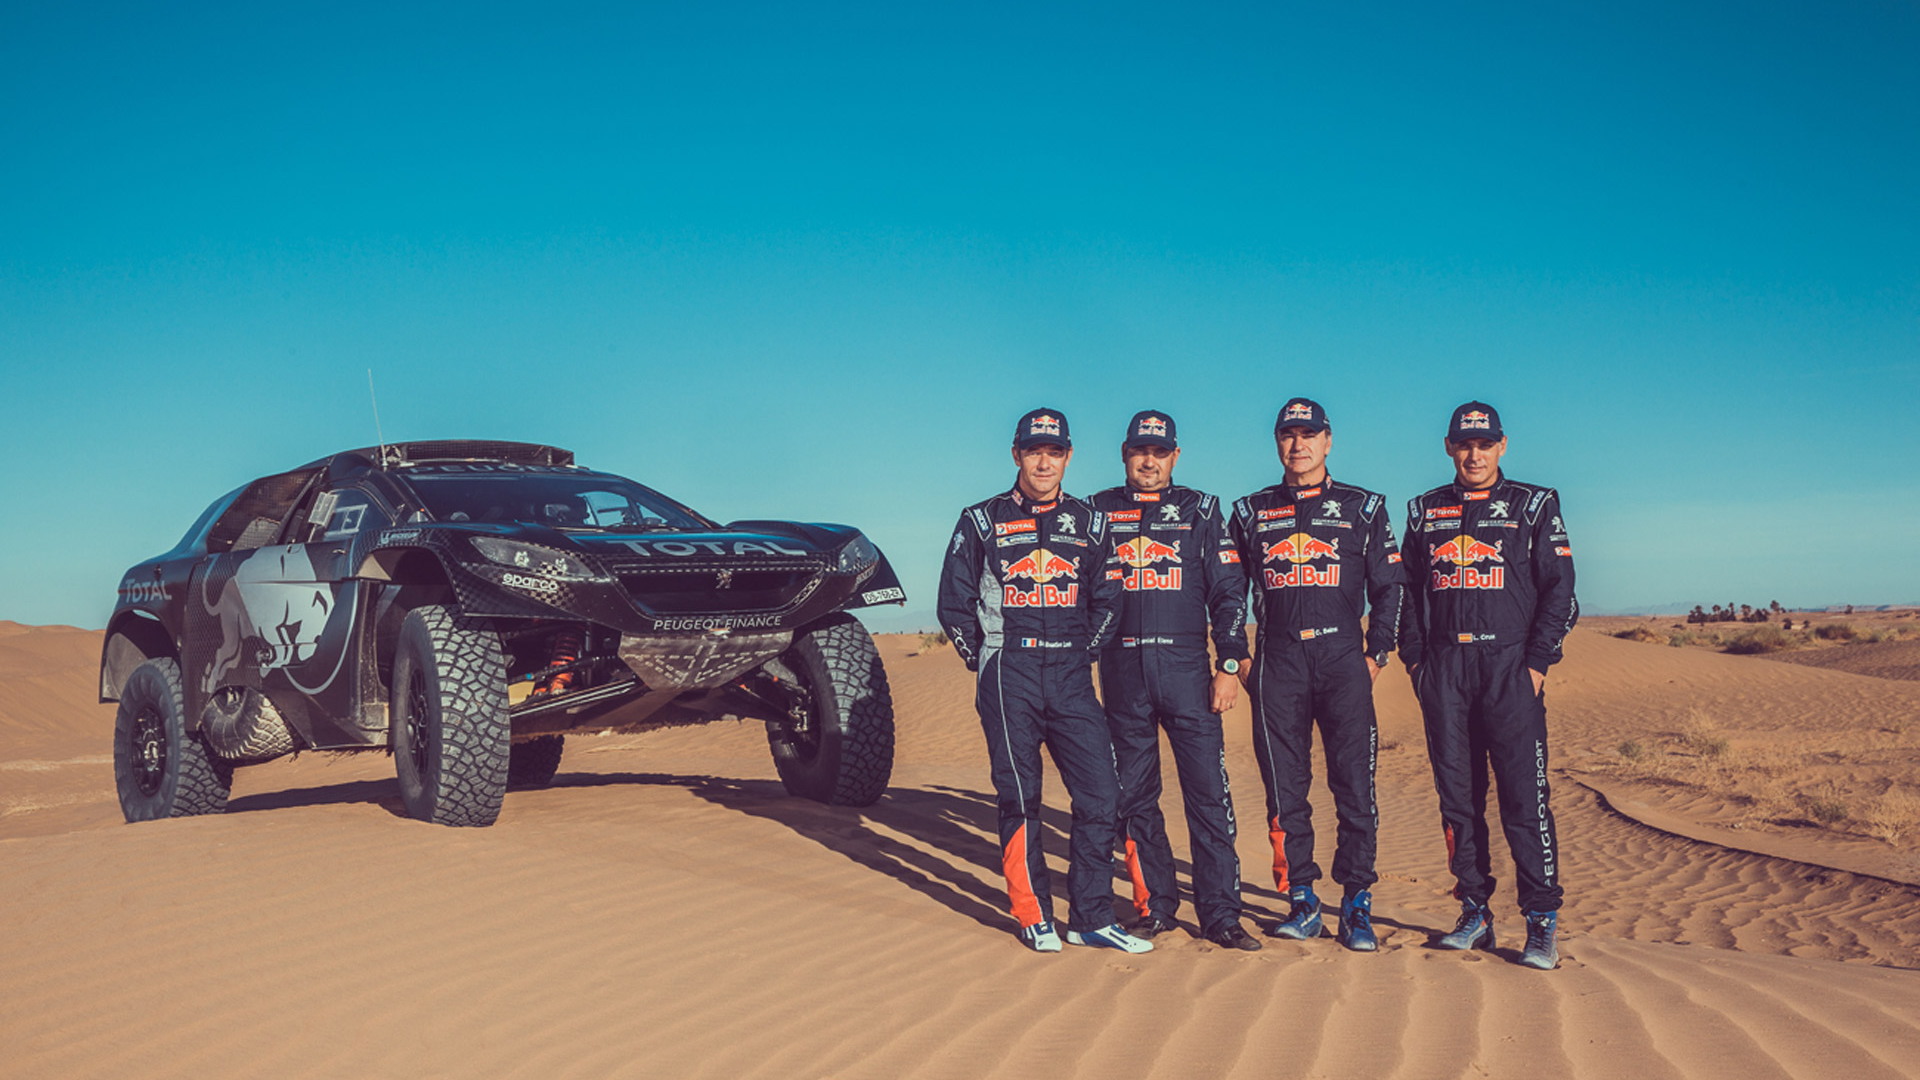 Sébastien Loeb joins 2016 Dakar Rally team Peugeot-Total